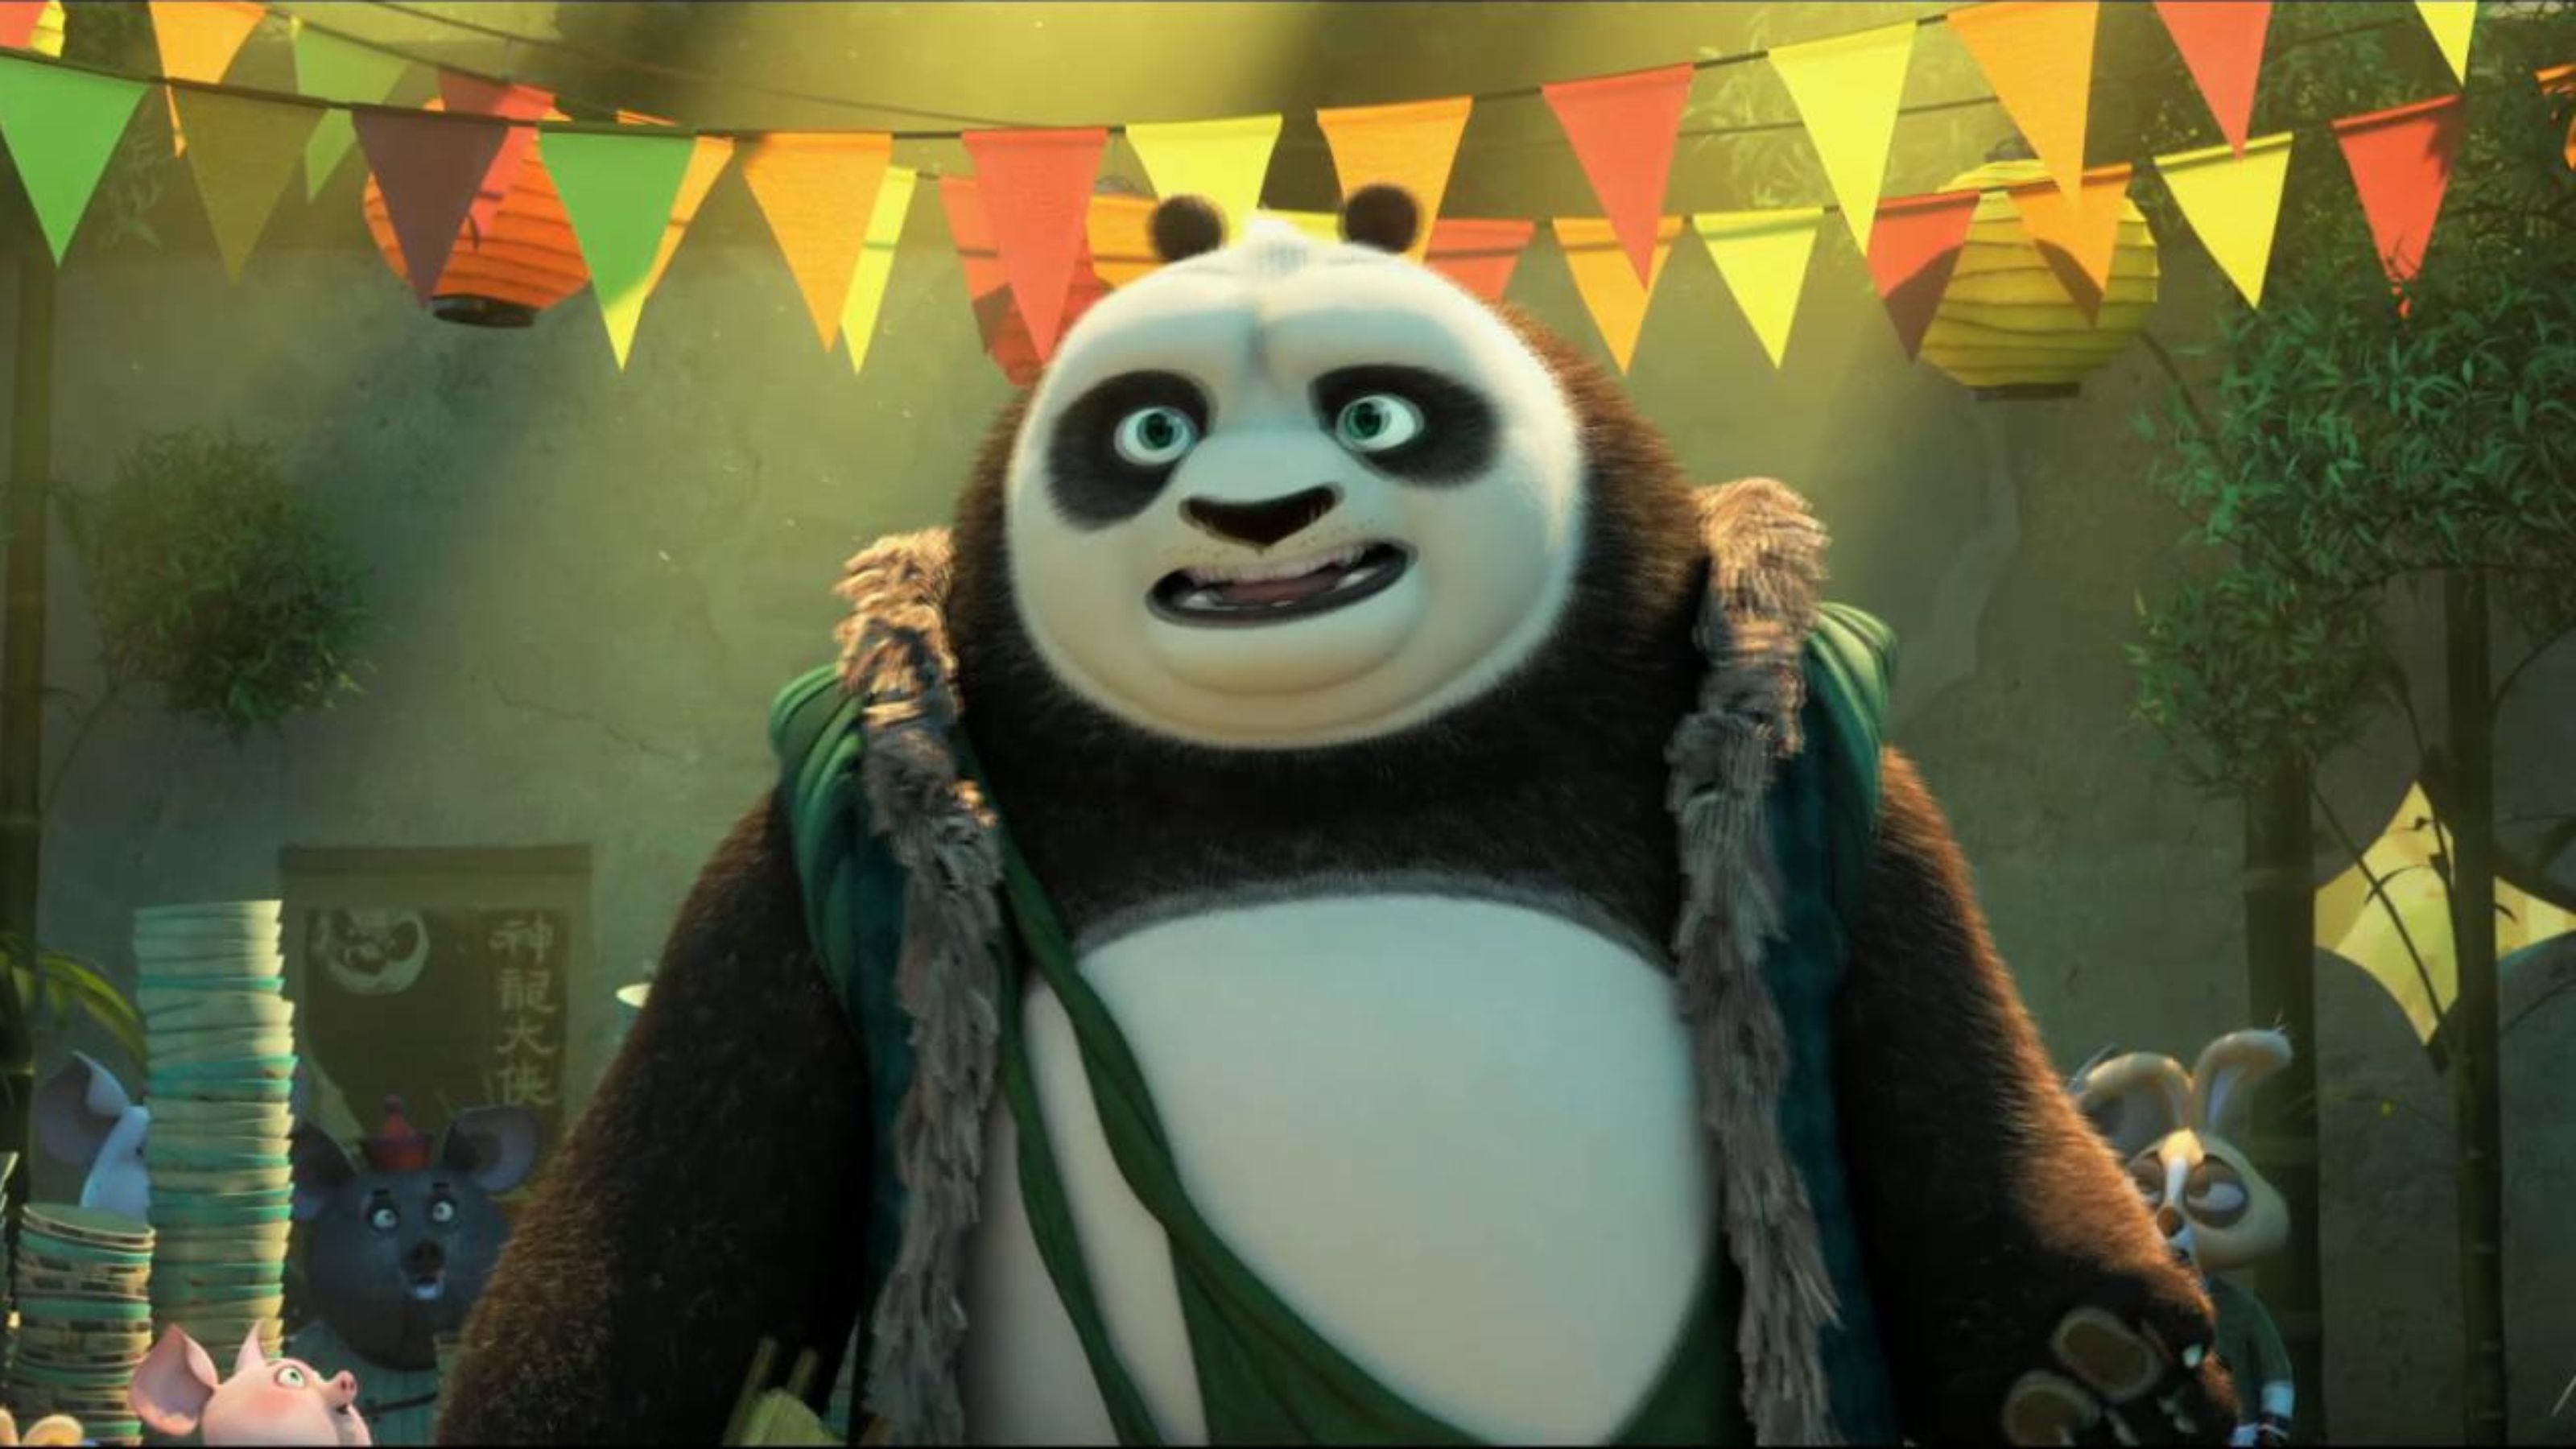 kung fu panda movies download